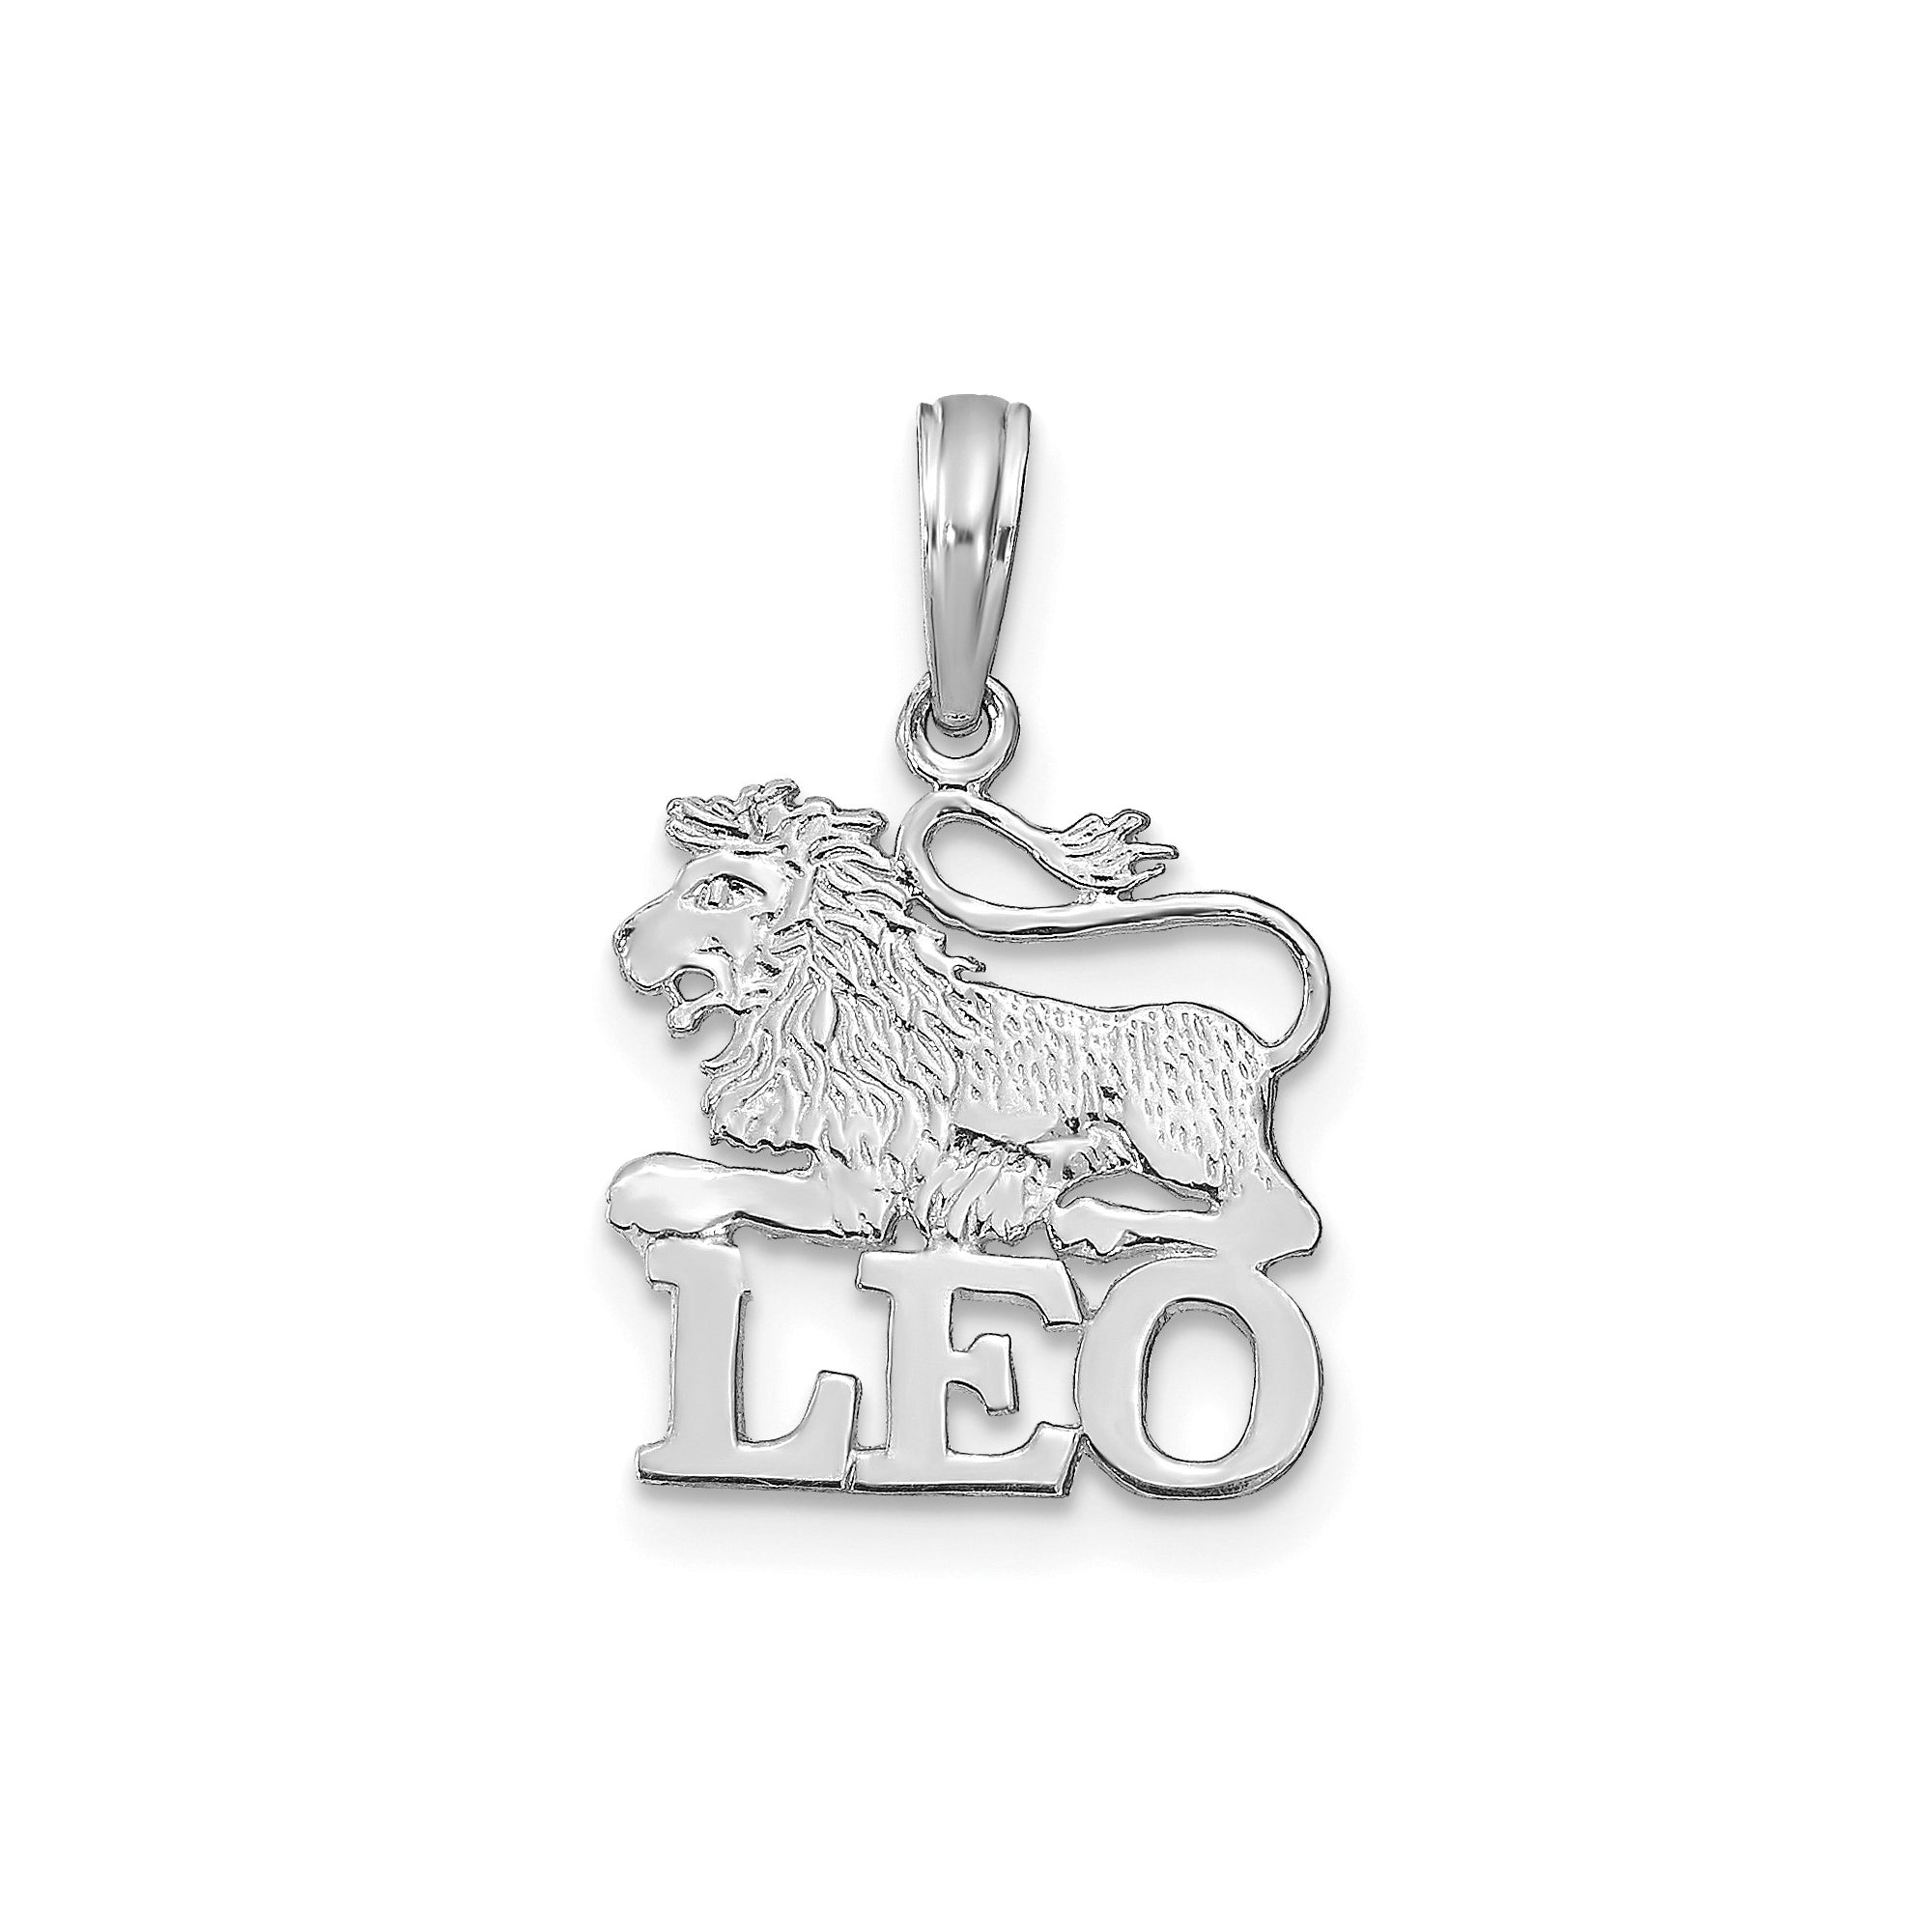 14k Real Solid Gold Zodiac Birth Symbol Pendant Charm fine designer jewelry for men and women